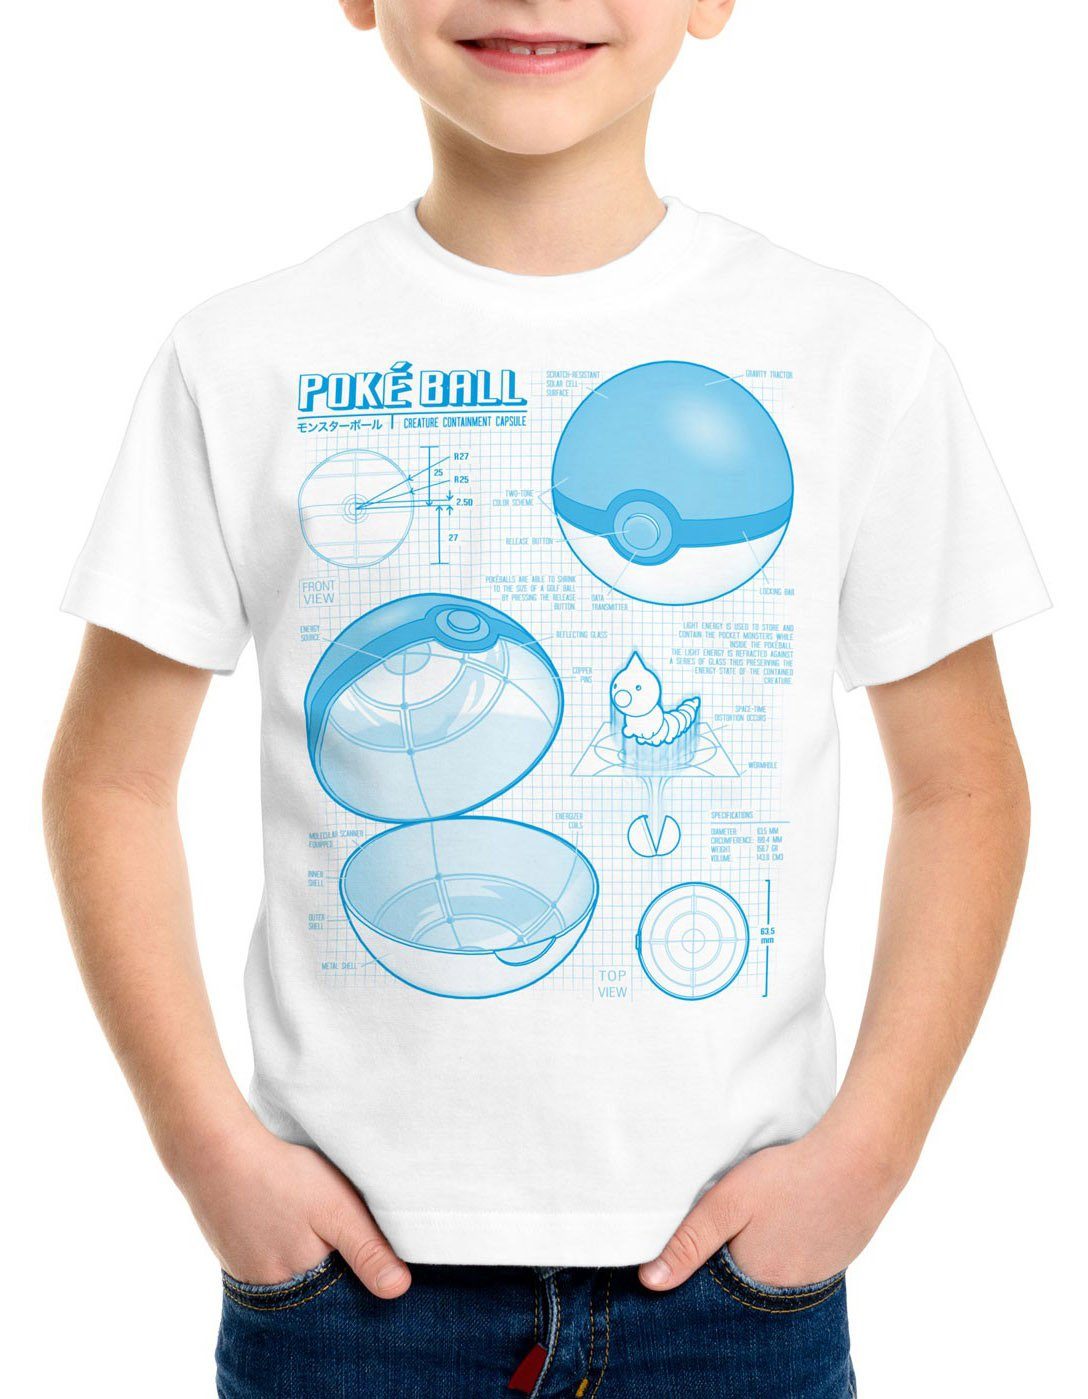 style3 Print-Shirt Kinder T-Shirt Pokéball Blaupause monster spiel online weiß